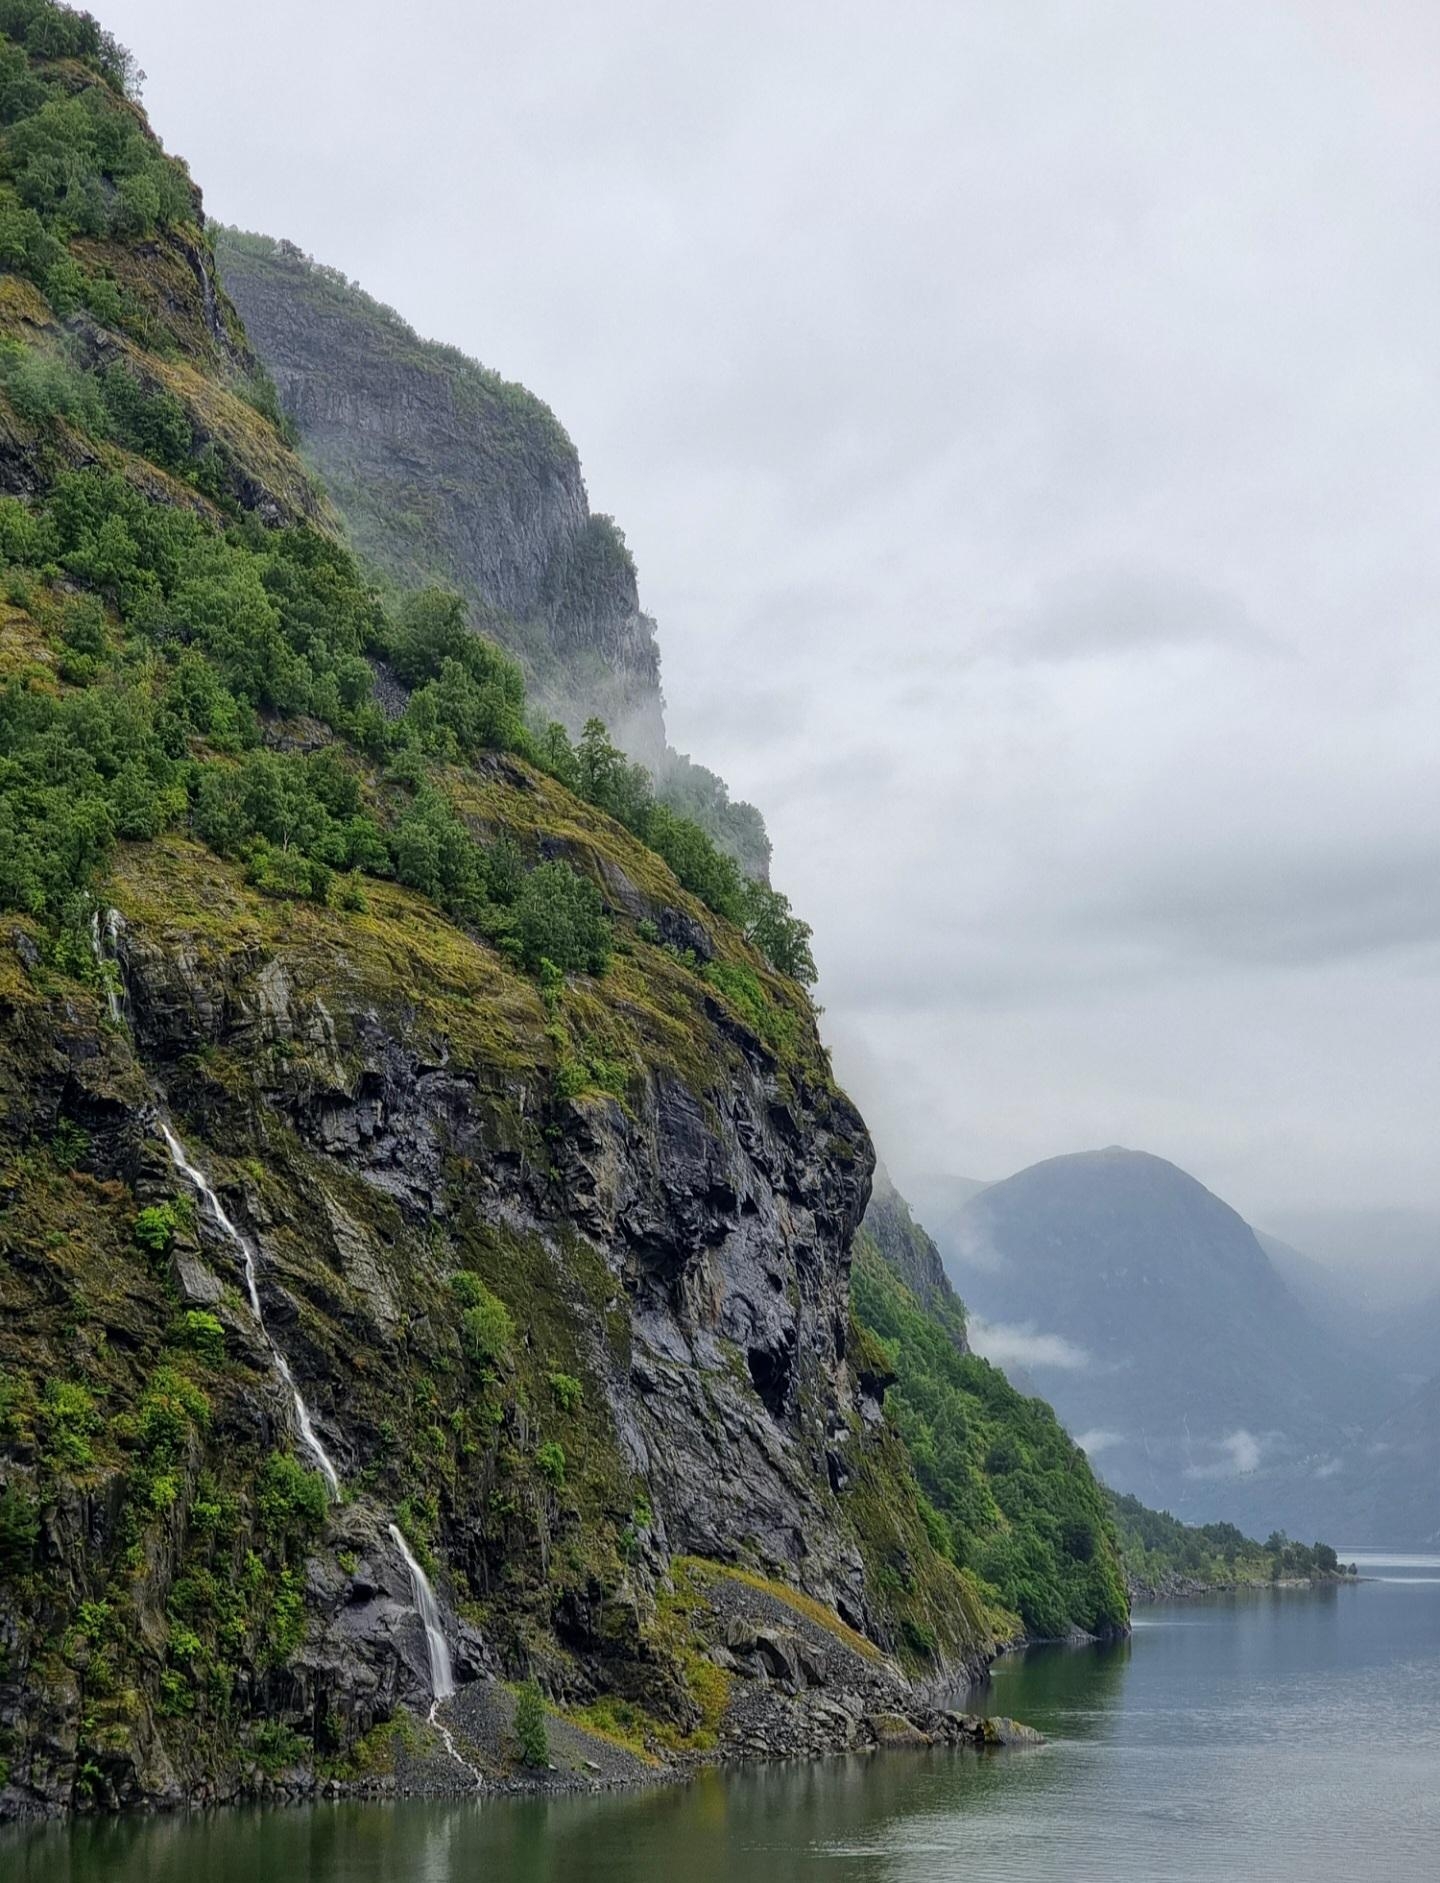 #nowordsneeded 😍 #Naturliebe #Outdoor #Fjord #enjoythelittlemoments #Herbstfeeling 